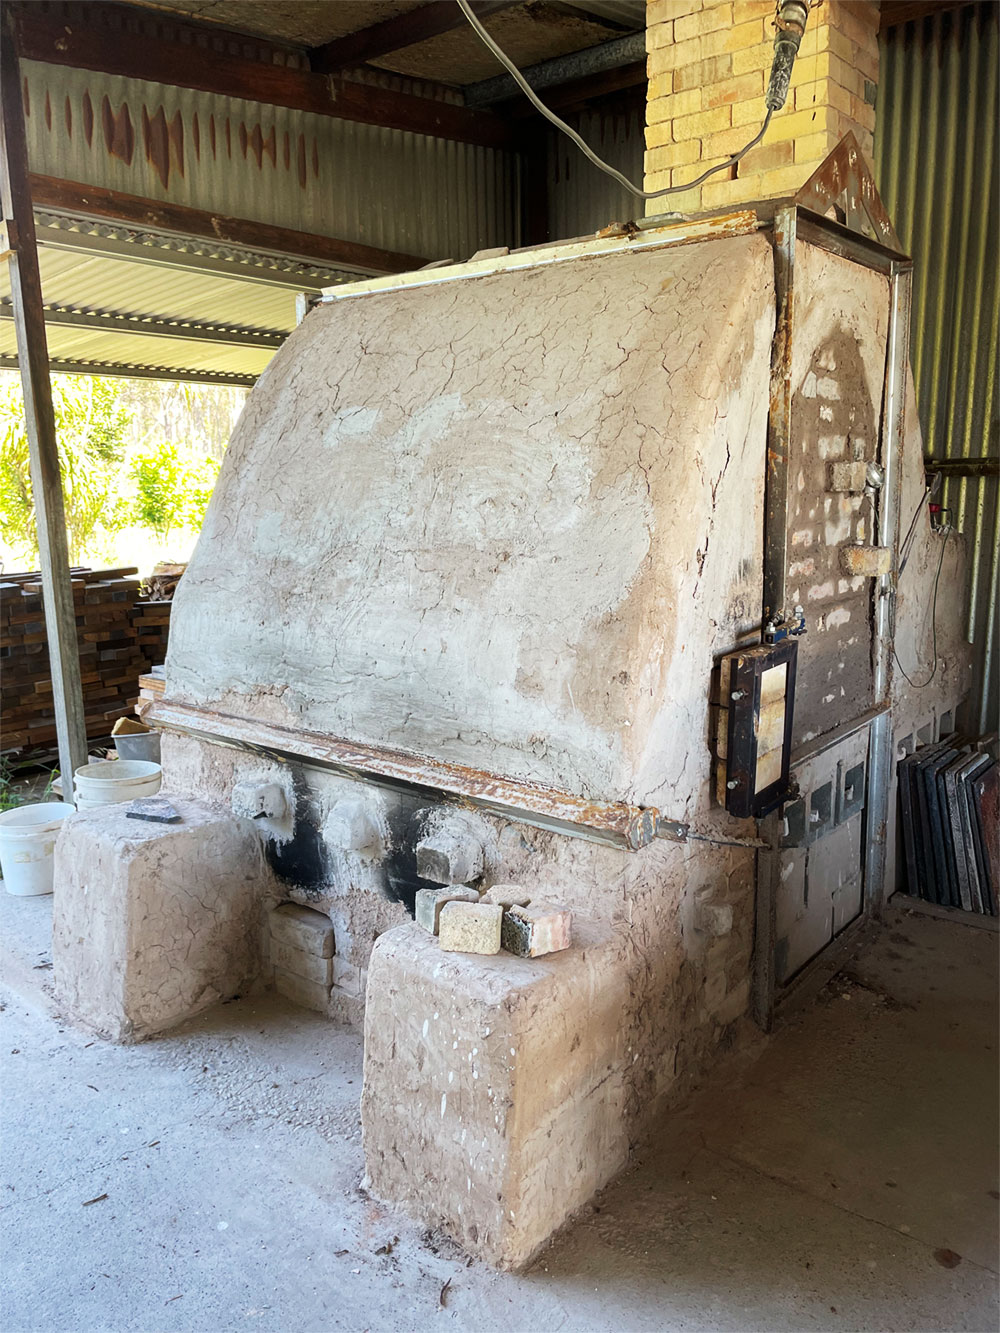 Jann Kesby's downdraft catenary arch kiln